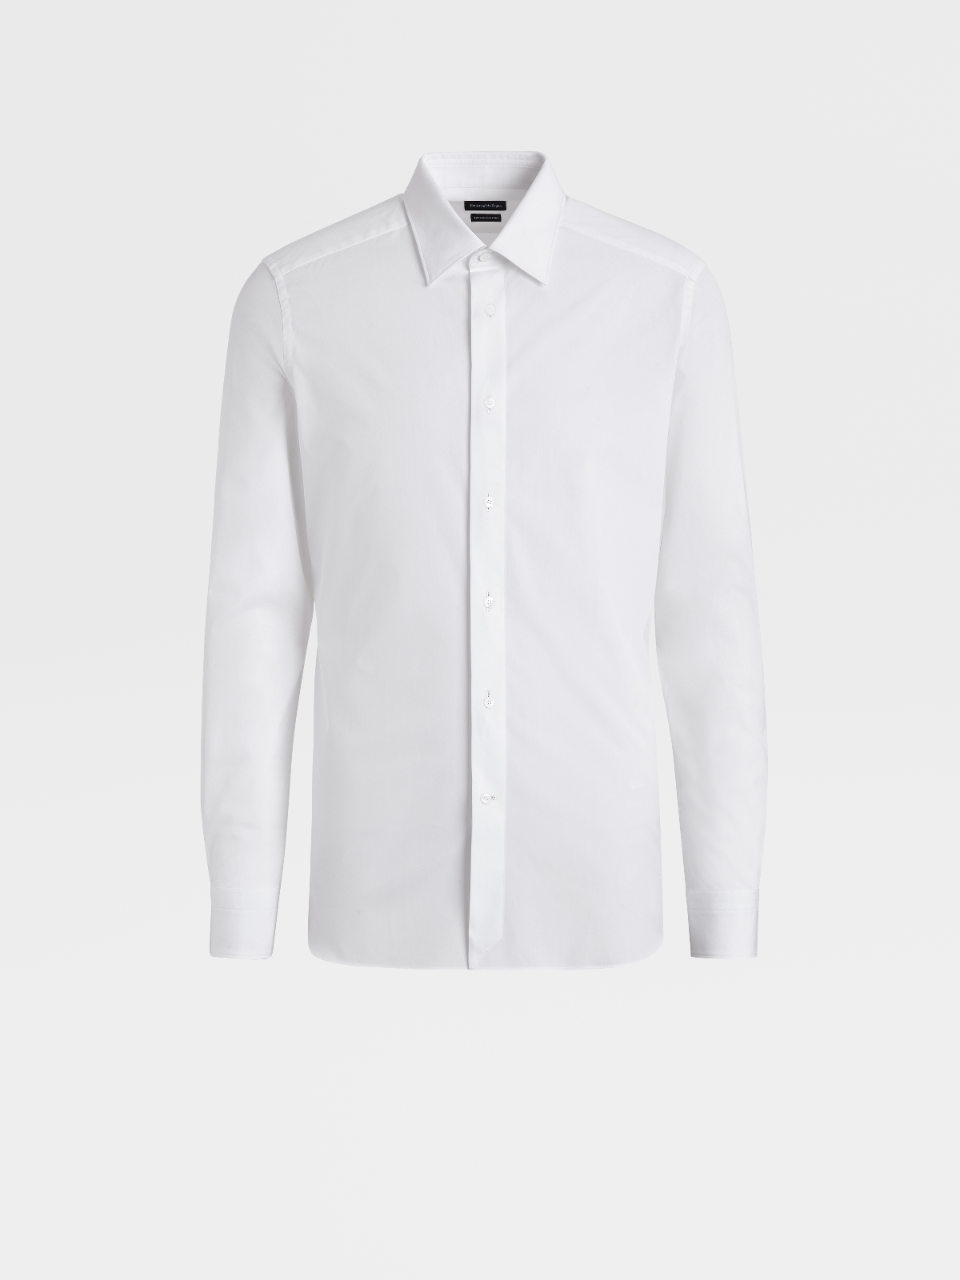 White Trofeo™ Comfort Cotton Tailoring Shirt, City Slim Fit